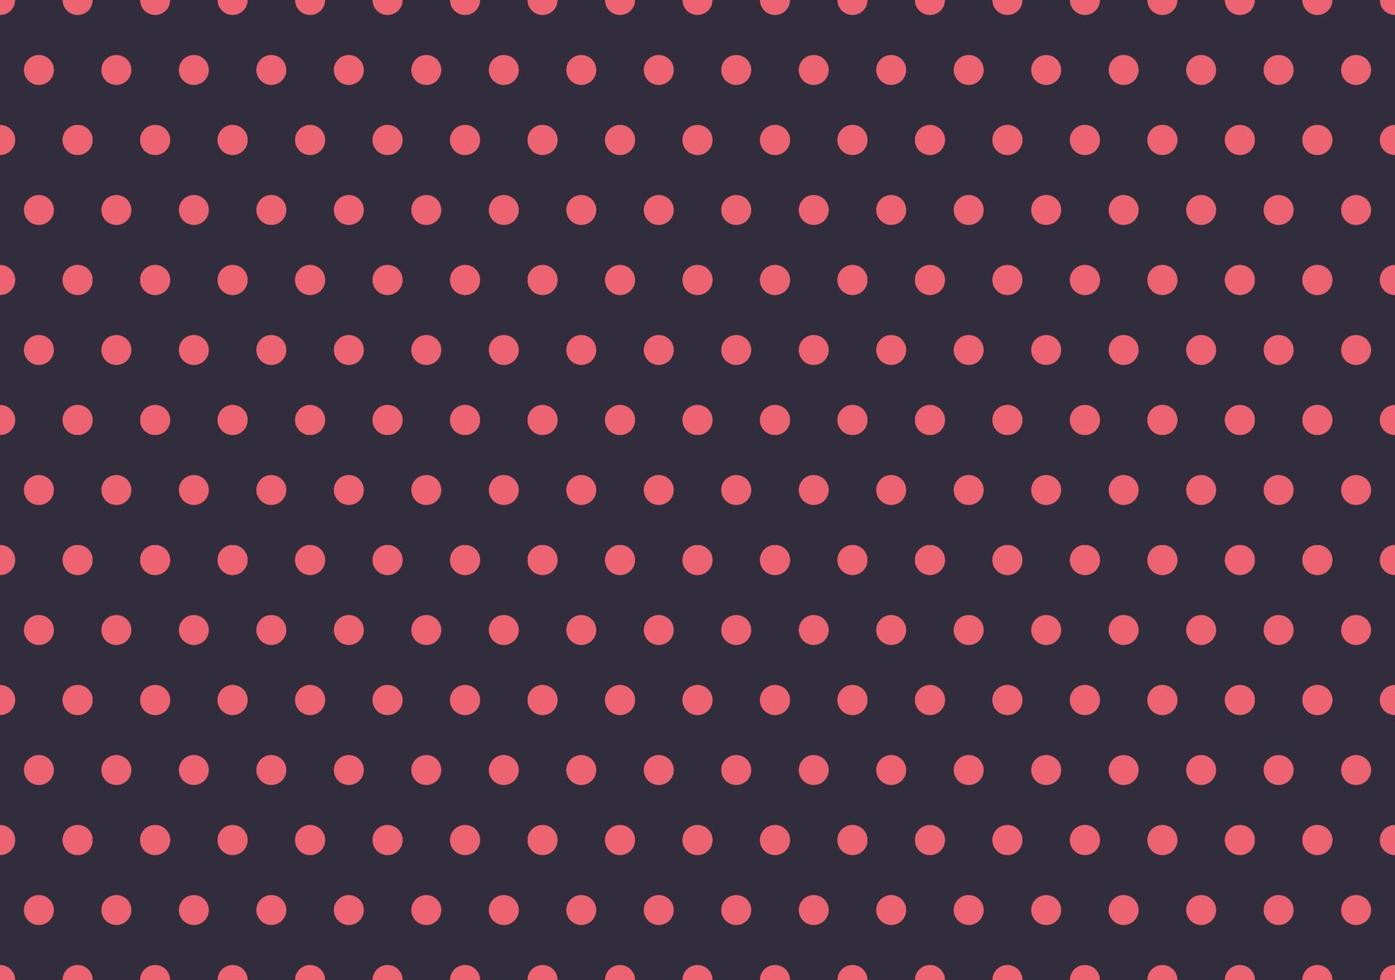 Abstract red polka dot seamless pattern vector